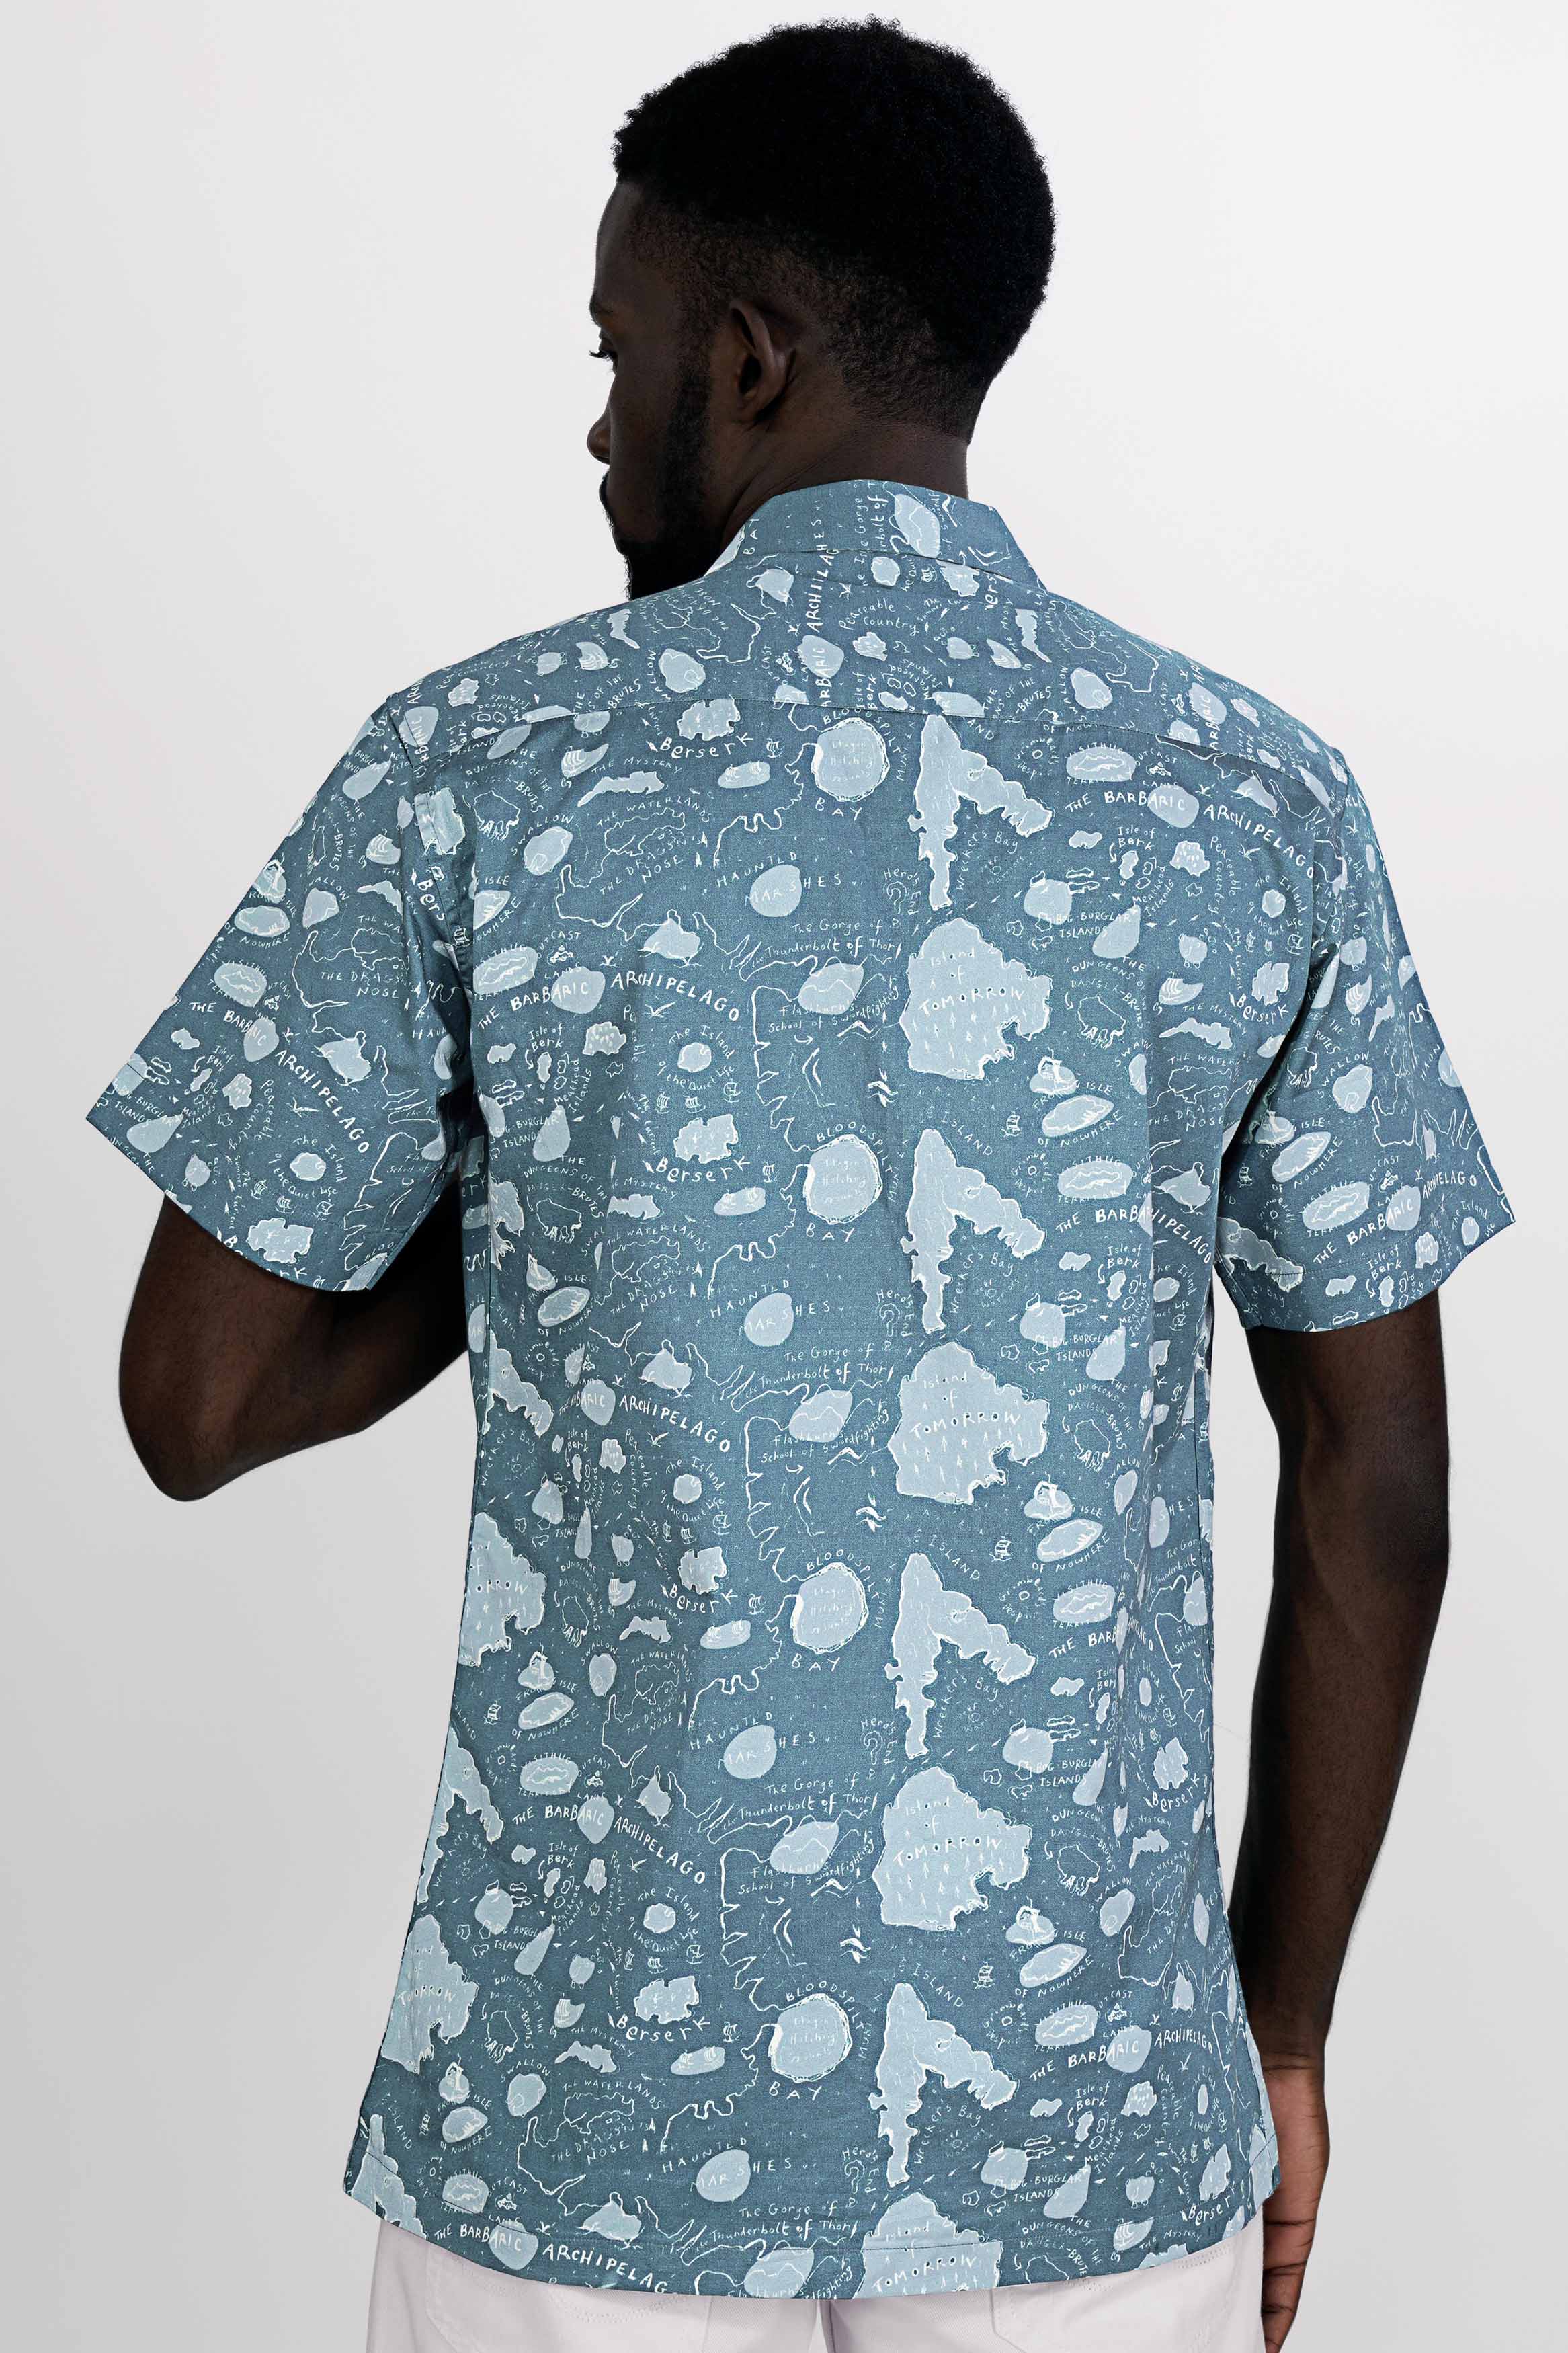 Blumine with Casper Gray Funky Printed Super Soft Premium Cotton Shirt